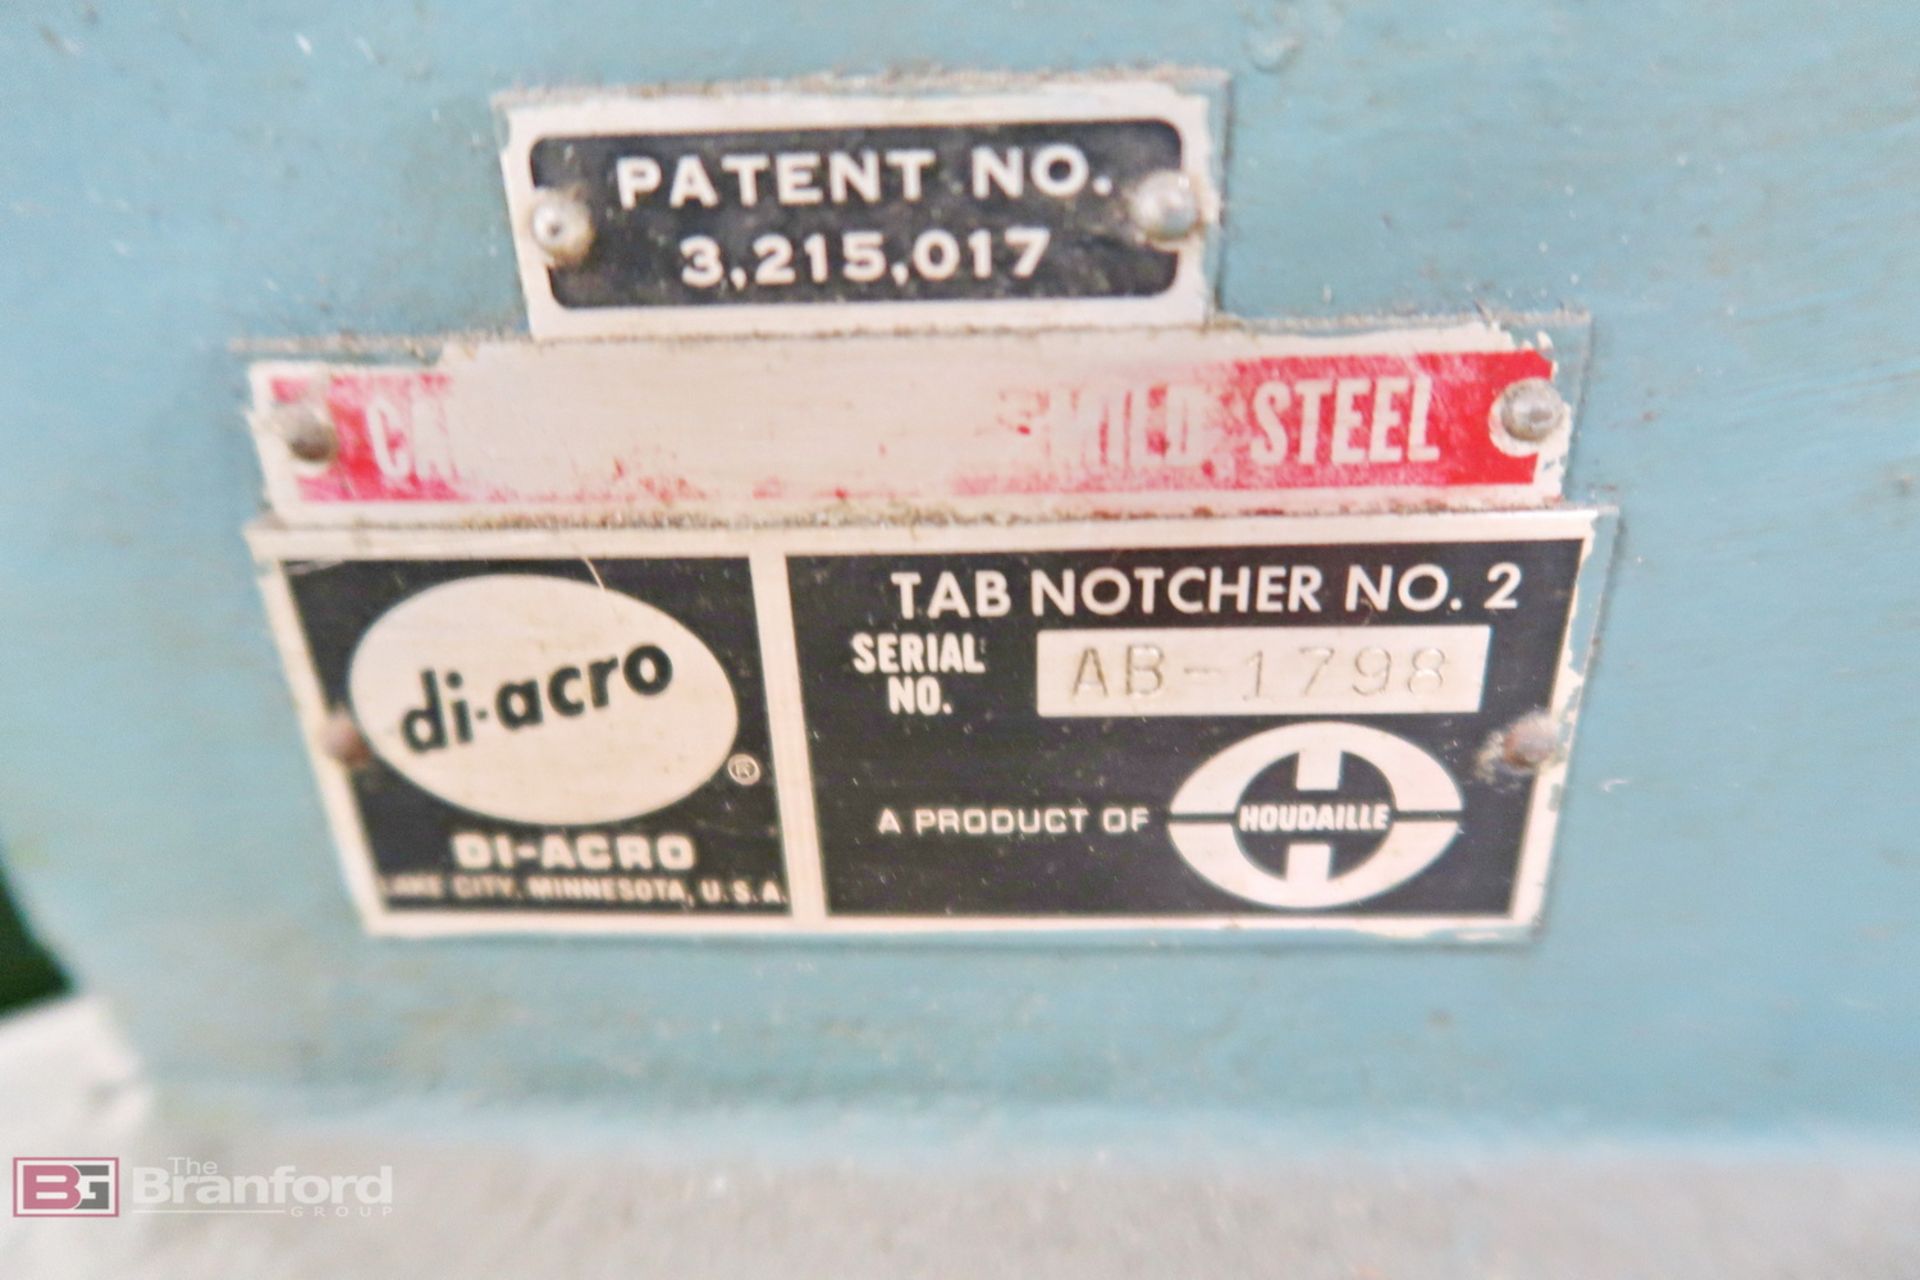 Di-Acro tab notcher no. 2 - Image 3 of 3